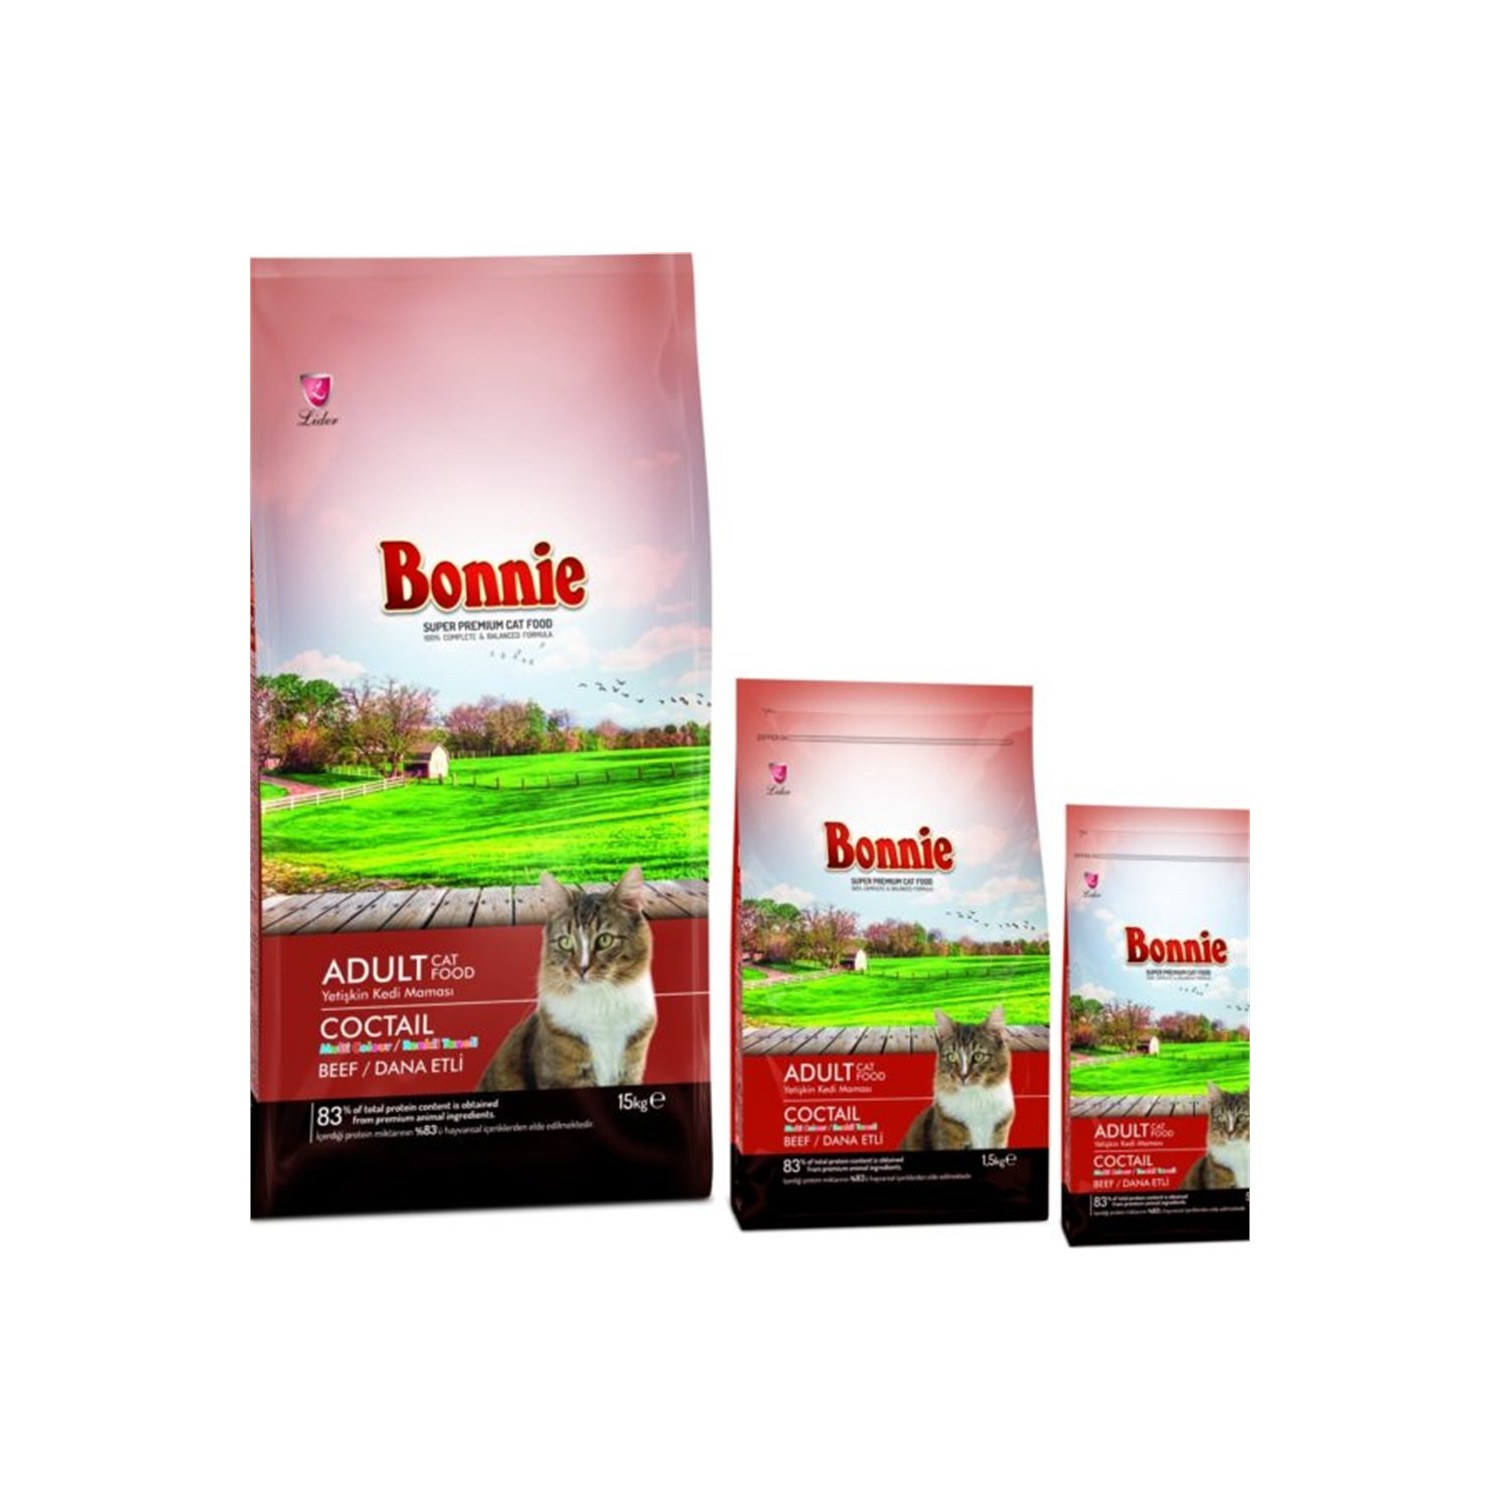 Bonnie Beef Dana Etli Renkli Taneli Yetişkin Kedi Maması 15 Fiyatı